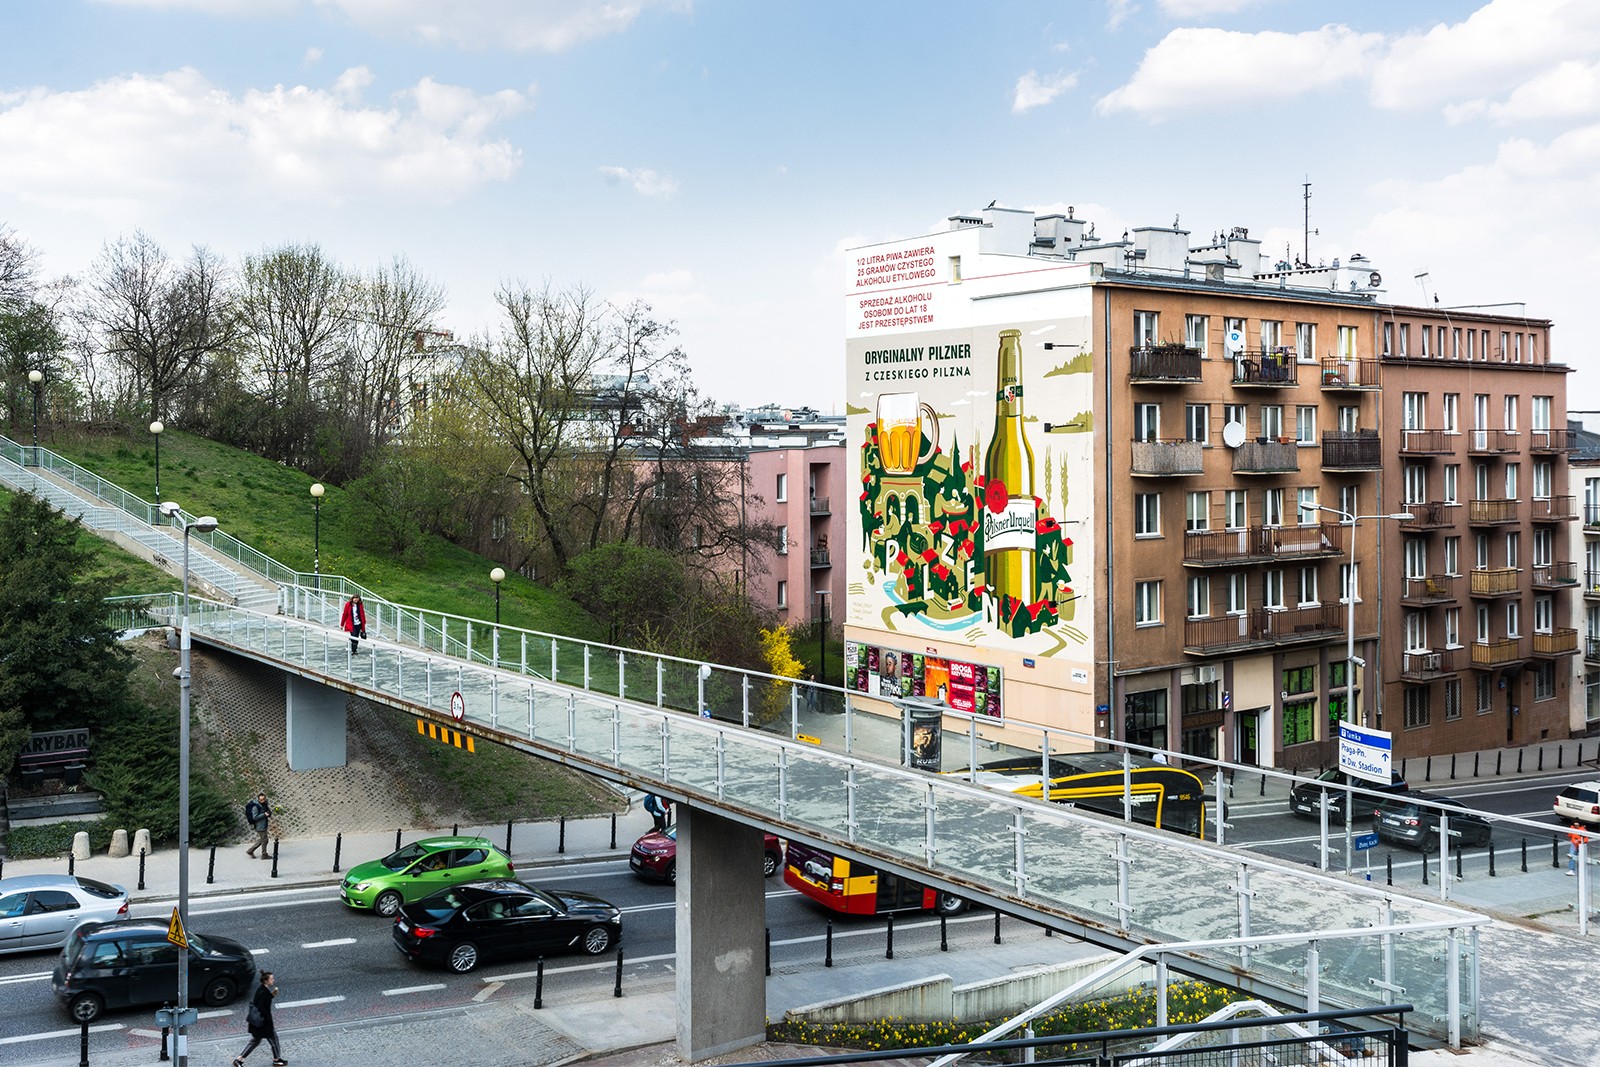 Mural Pilsner Urquell near the 36 Tamka street in Warsaw | Original pilsner from Czech Pilsen | Portfolio